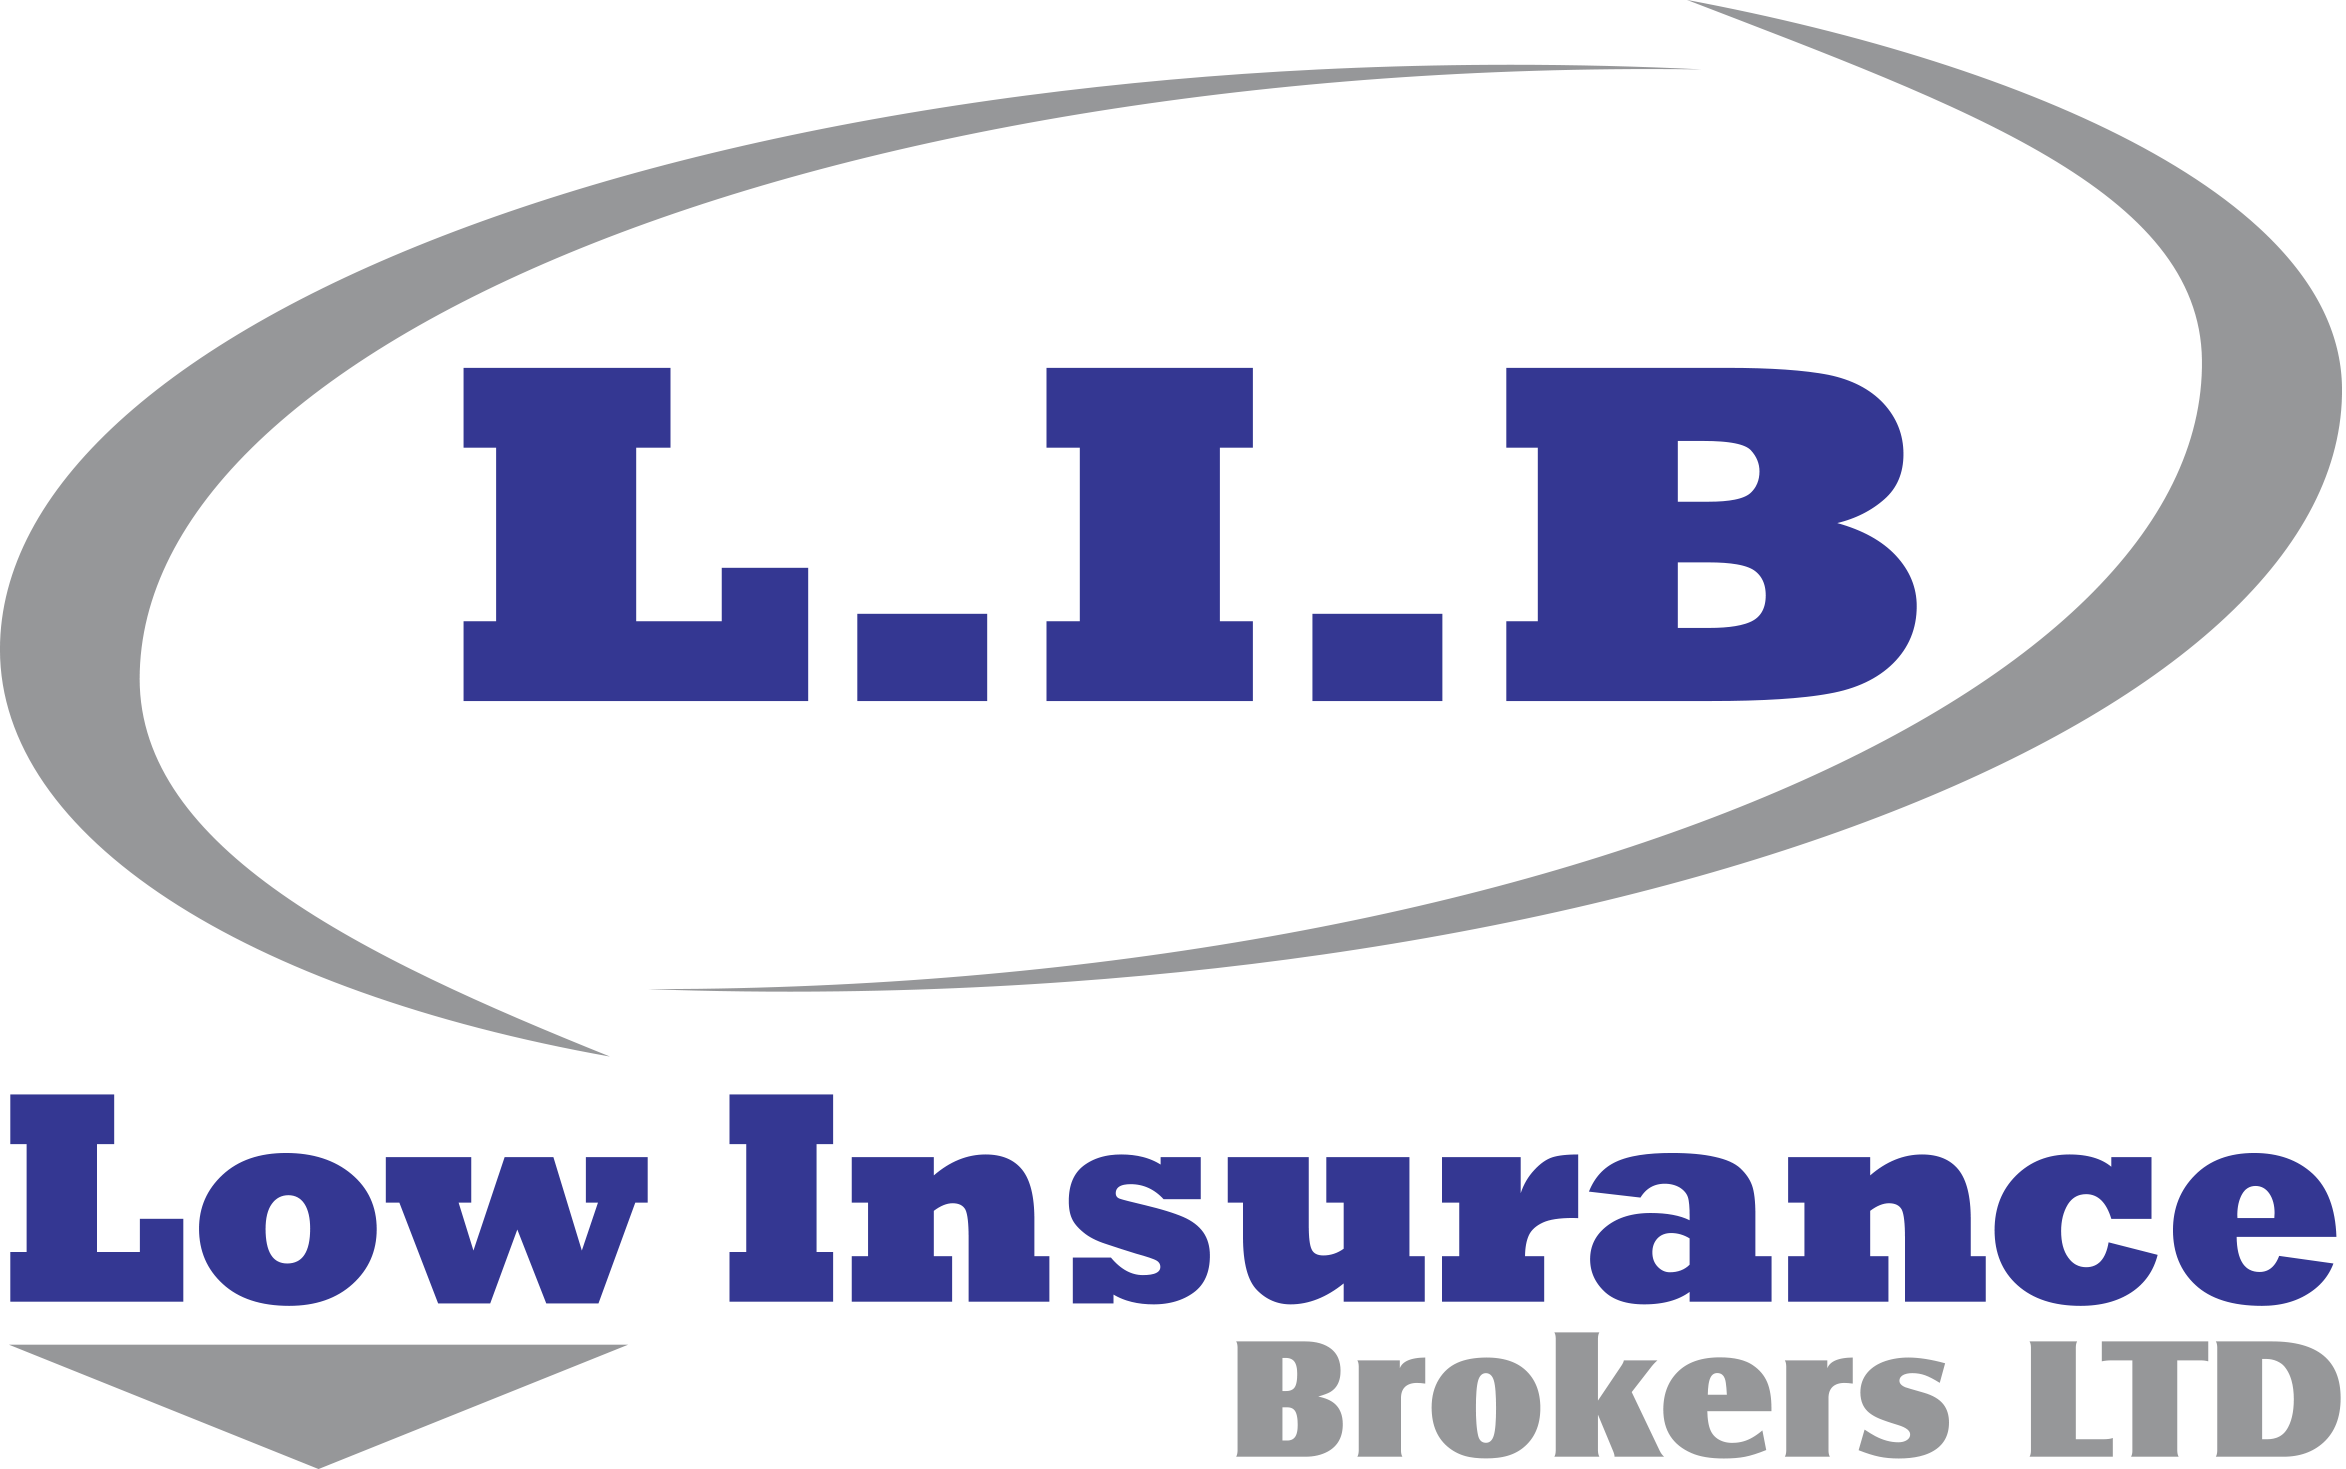 Low Insurance Brokers